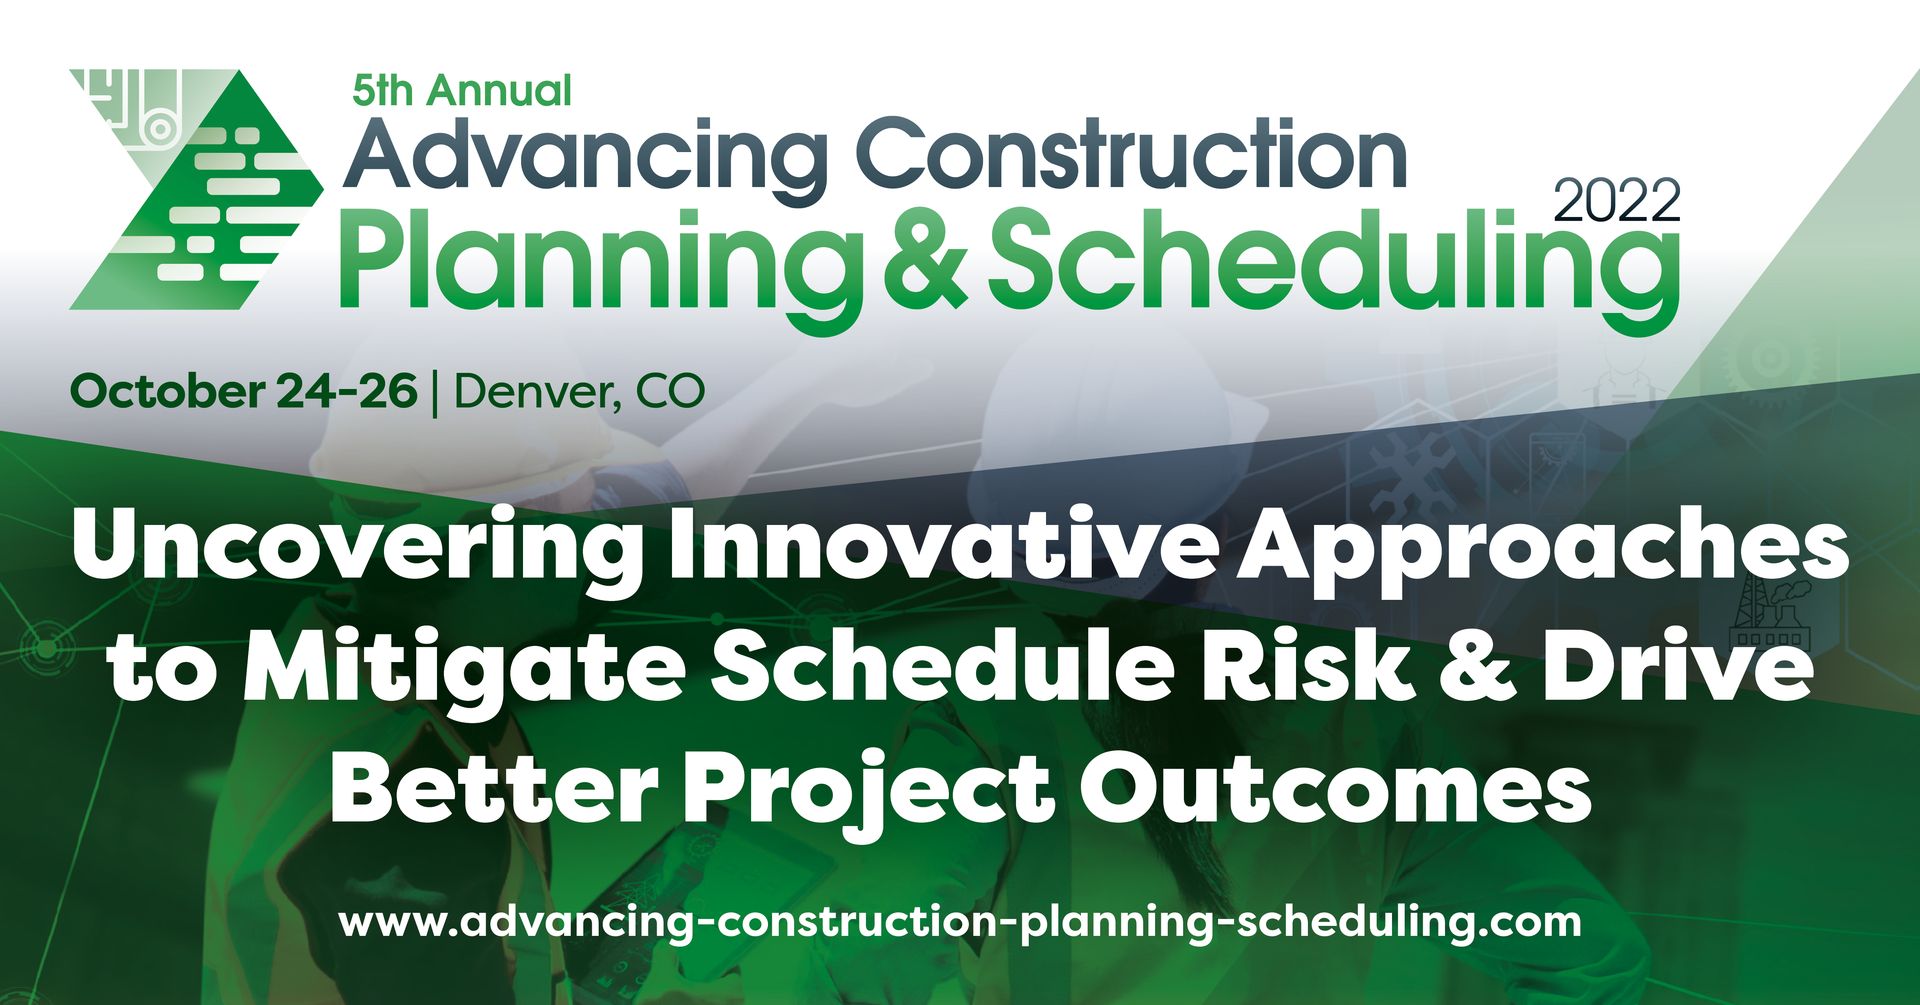 Advancing Construction Planning & Scheduling 2022 | October 24-26 | Denver, CO